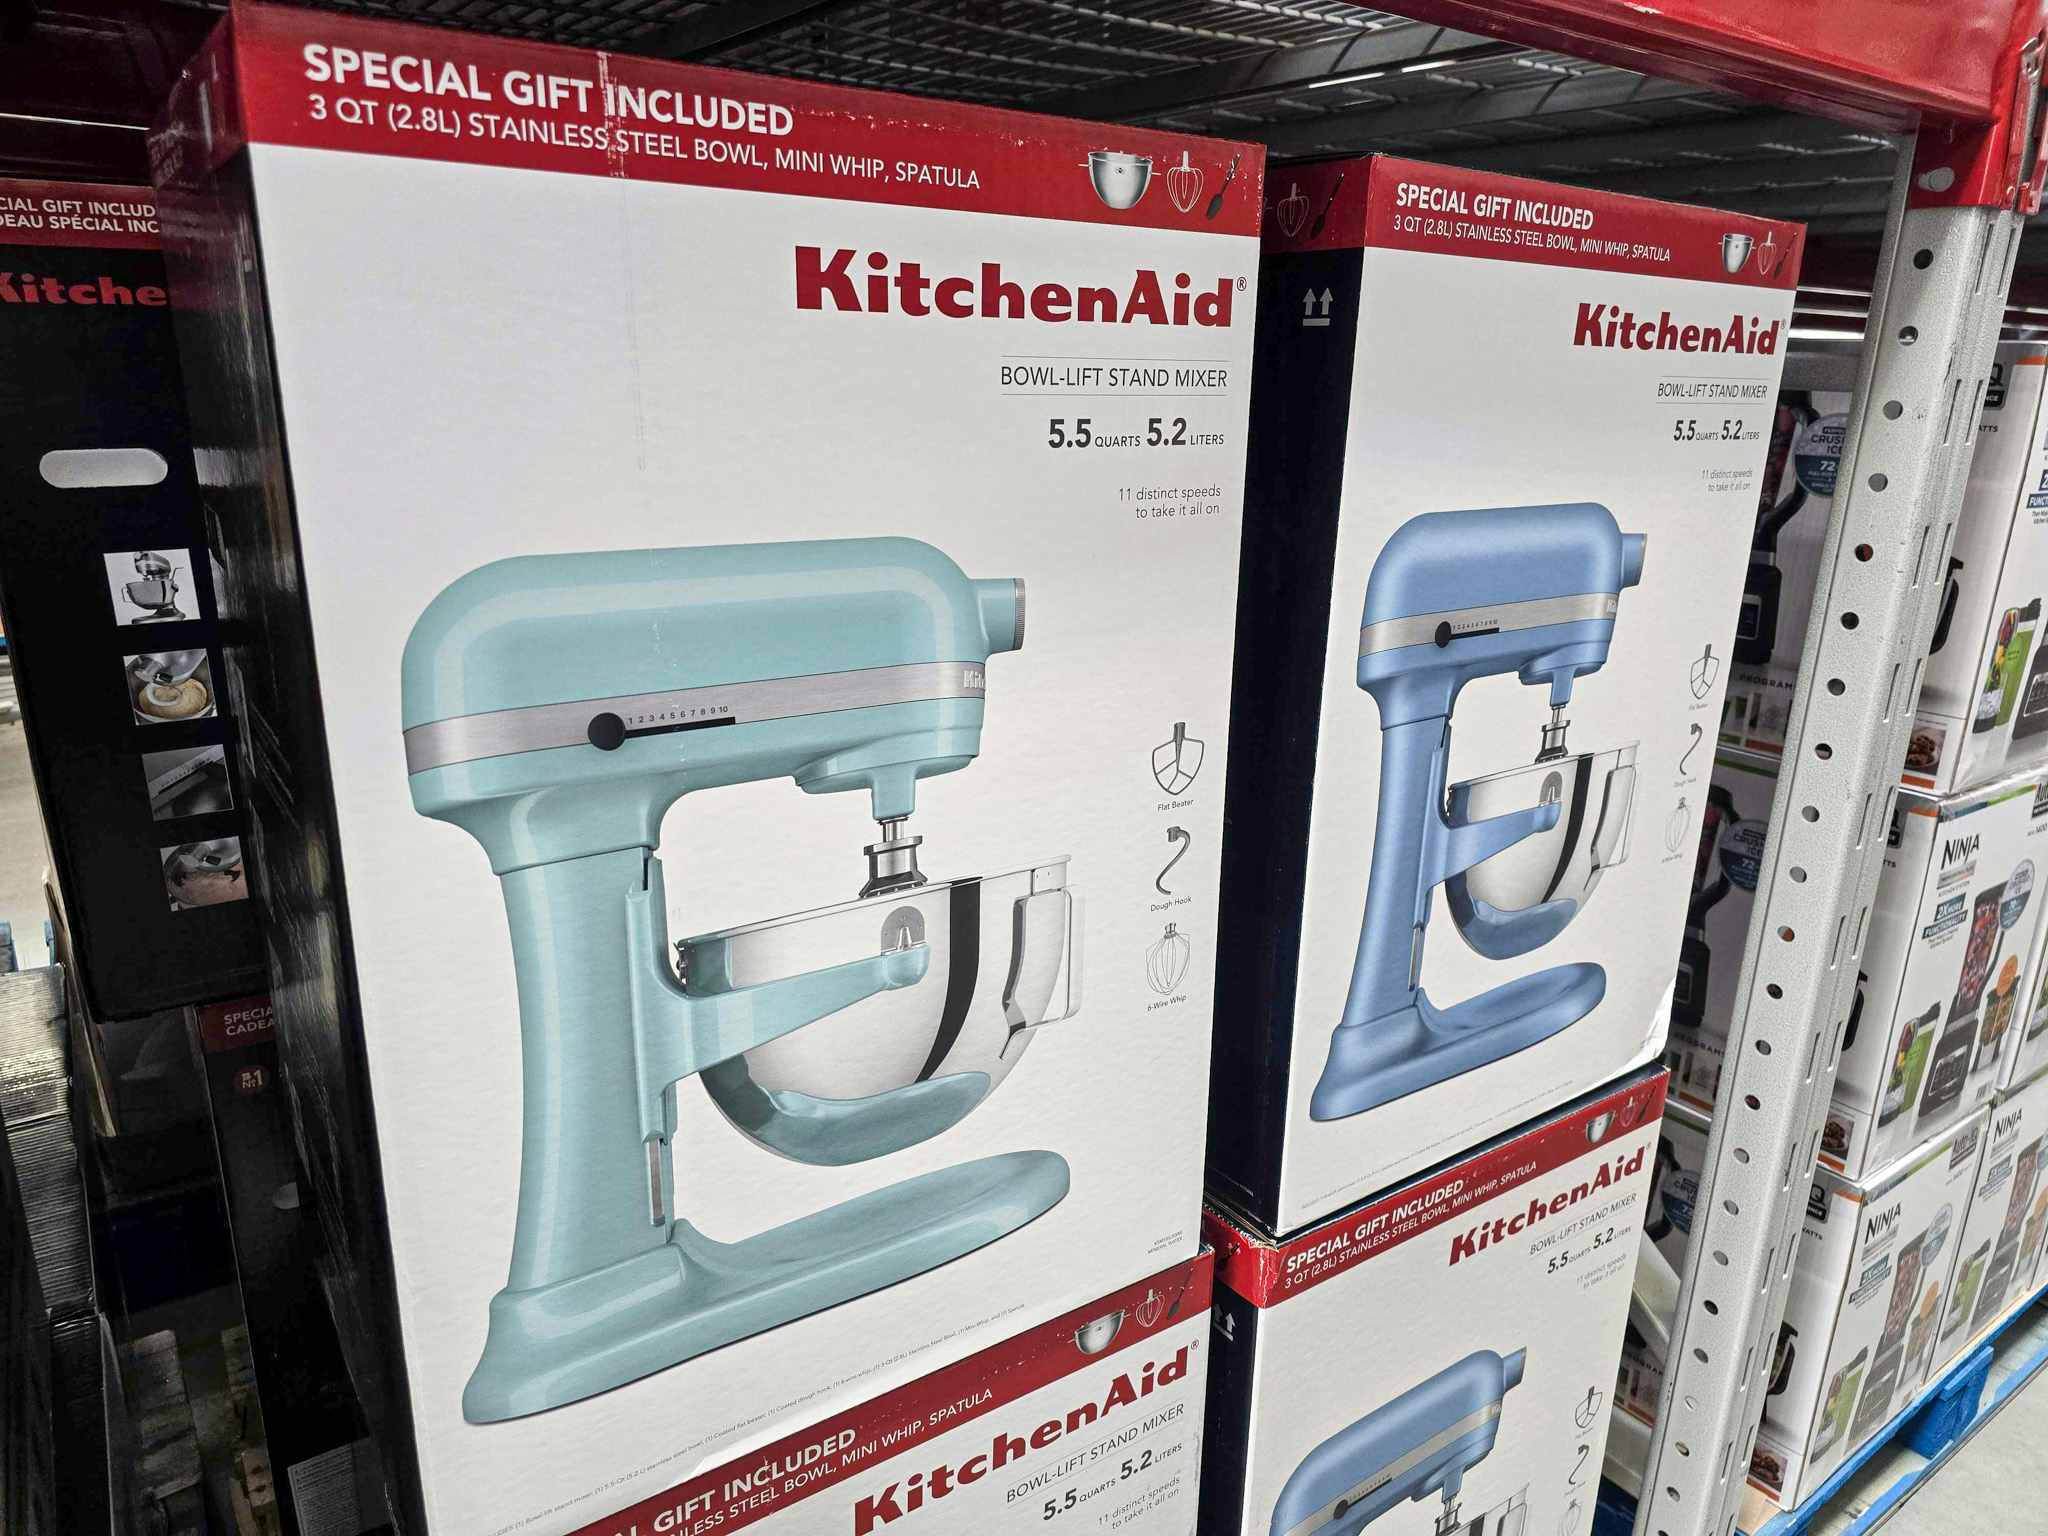 boxes of kitchenaid mixers